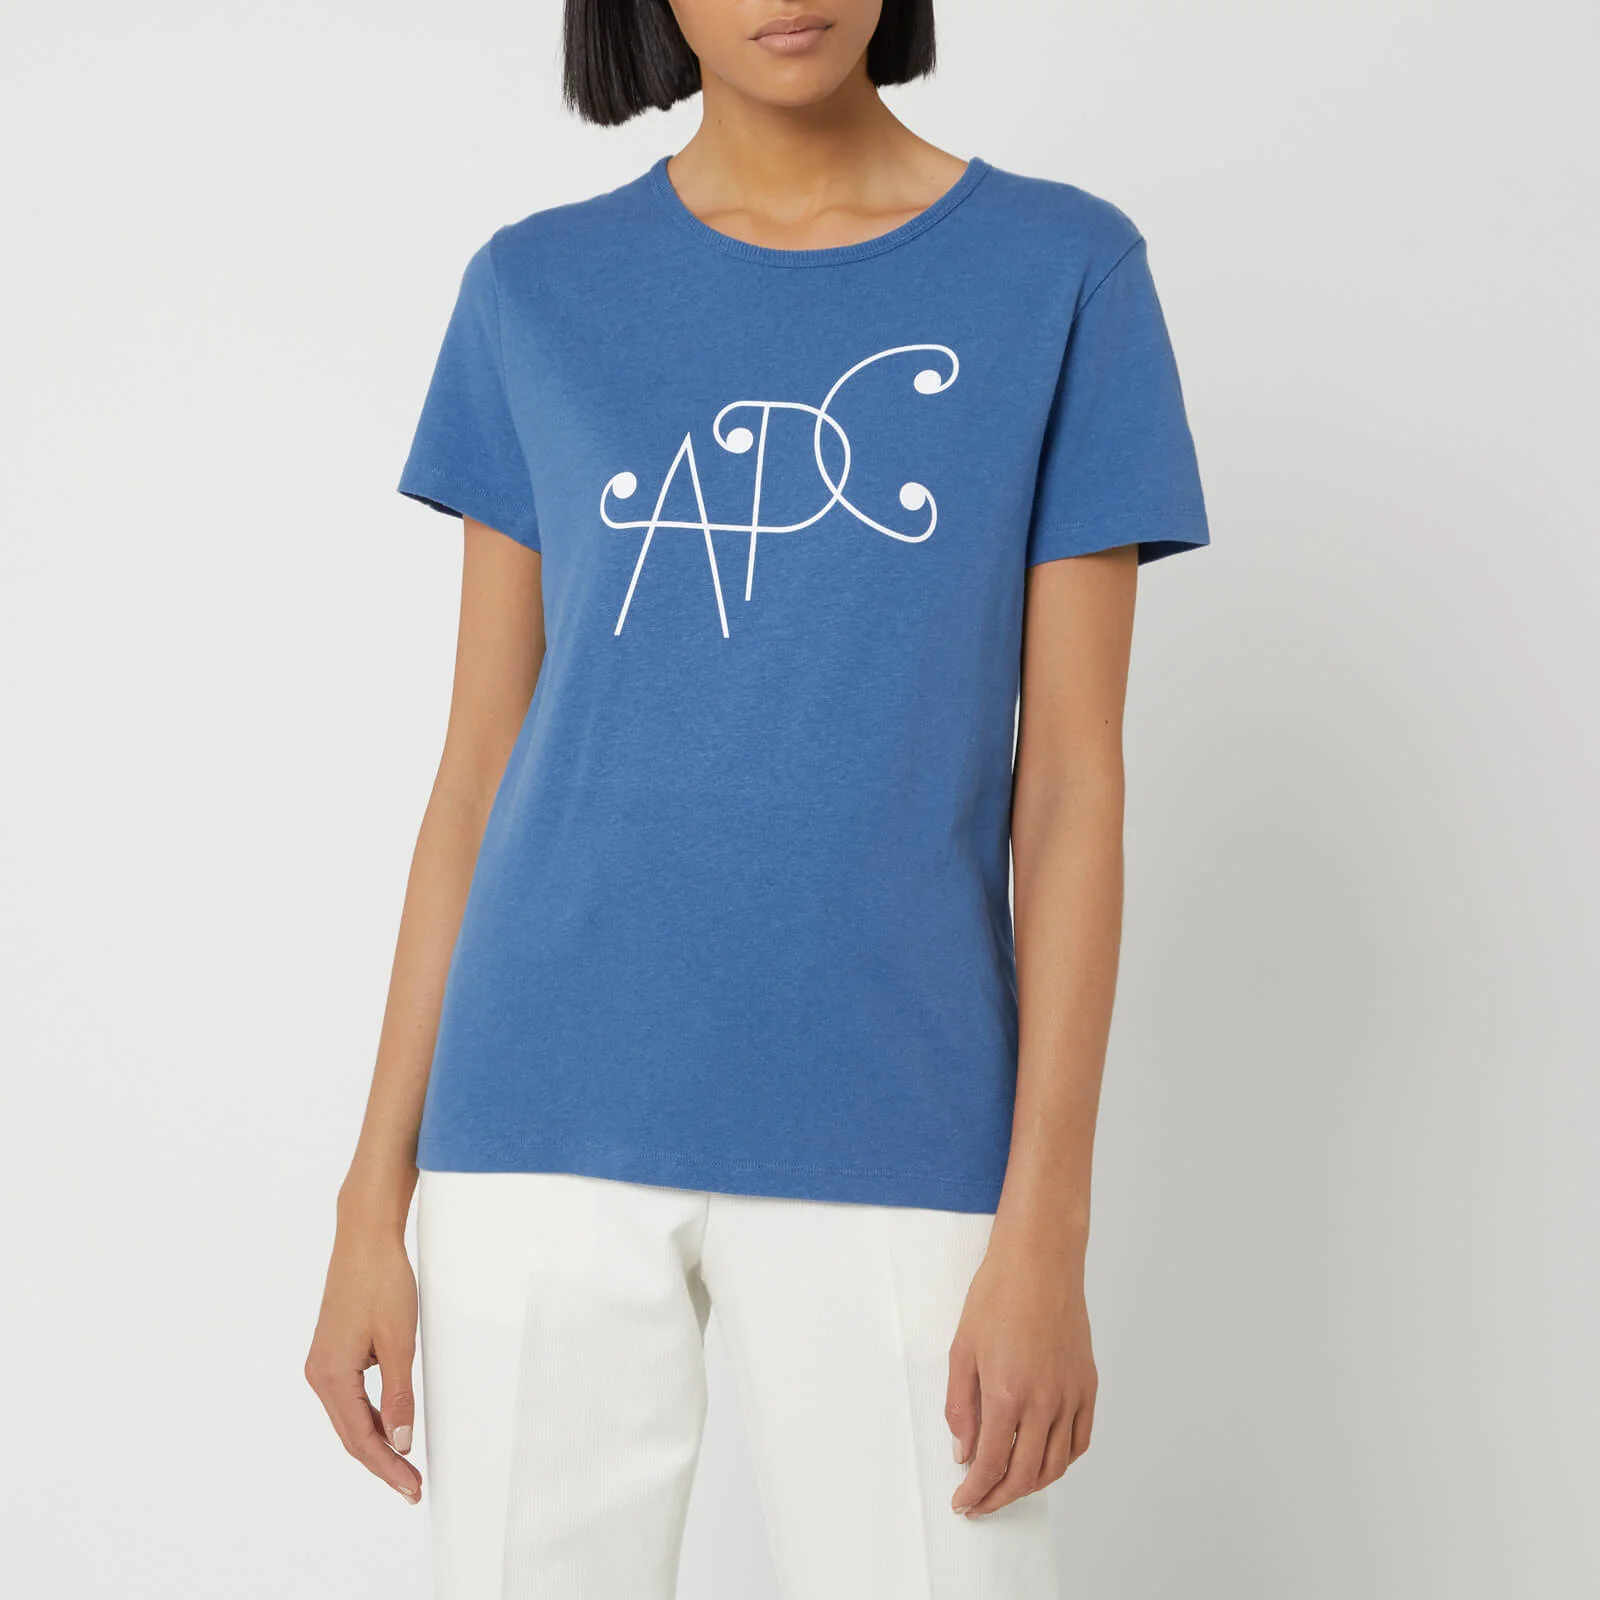 A.P.C. Women's Sienna T-Shirt - Blue Image 1